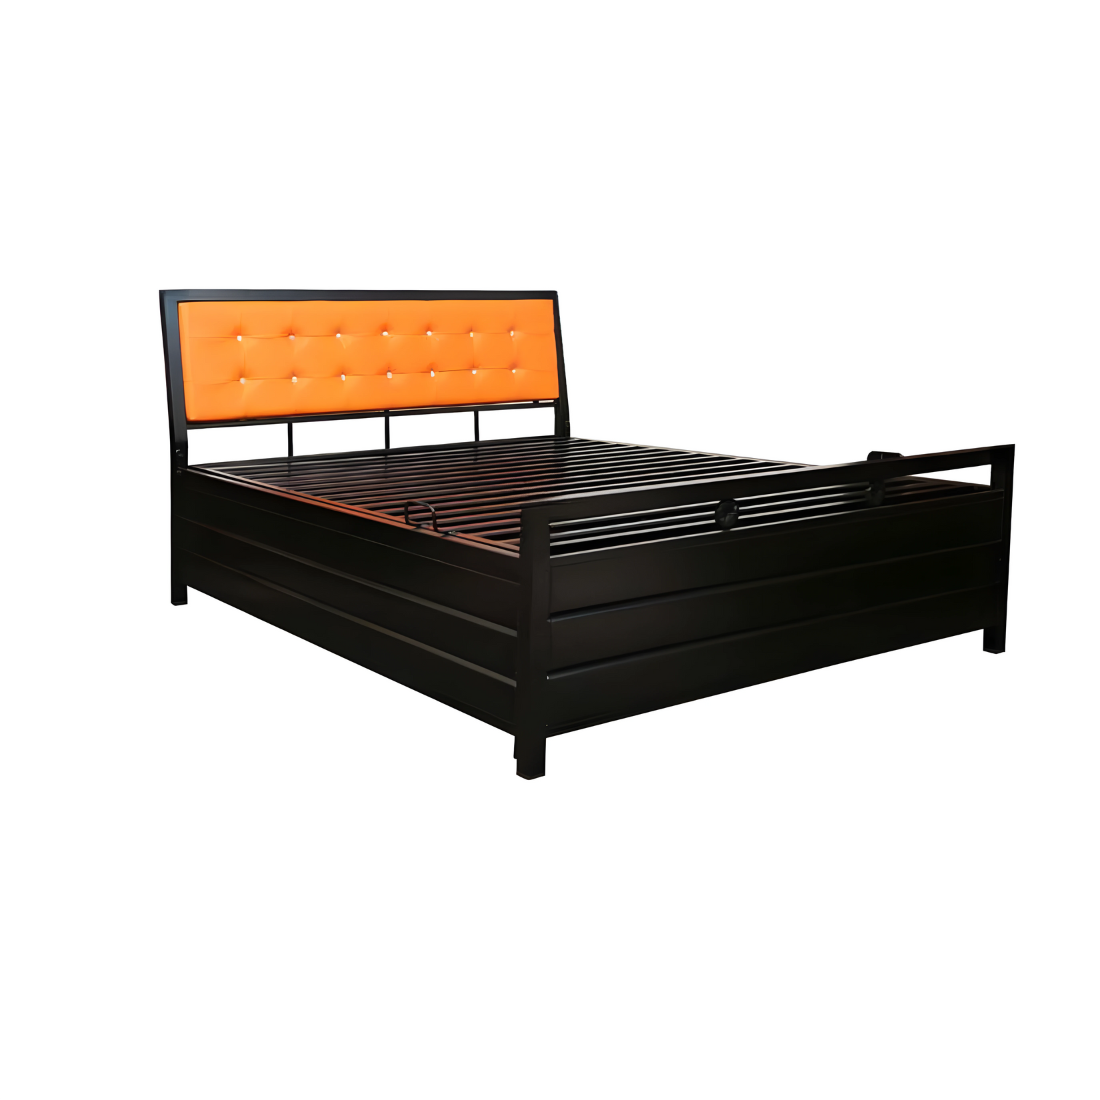 Heath Hydraulic Storage King Metal Bed with Orange Cushion Headrest (Color - Black)